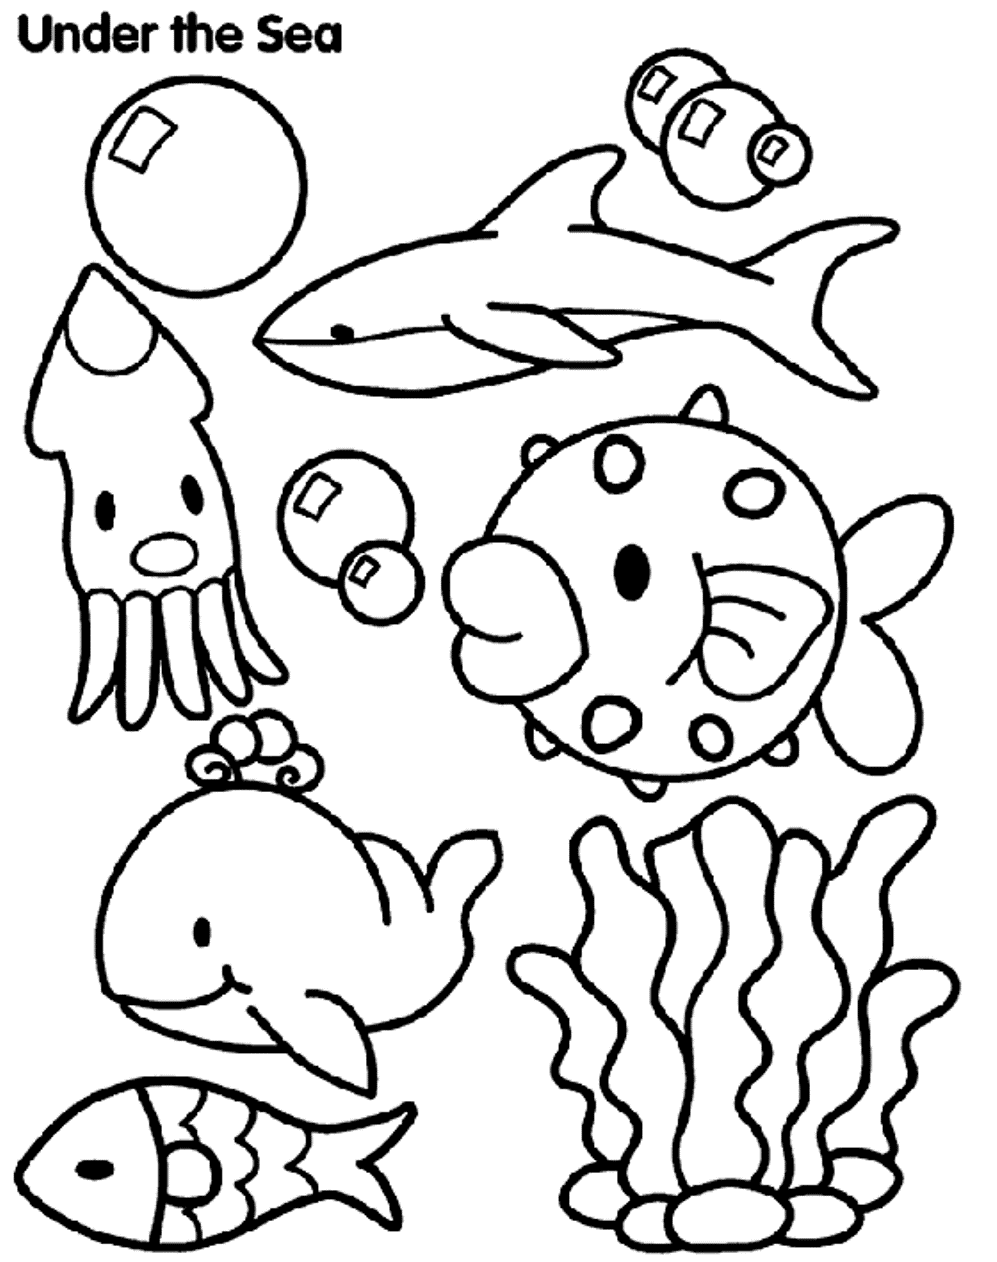 Under The Sea S Of Sea Animalsdf8a Coloring Page